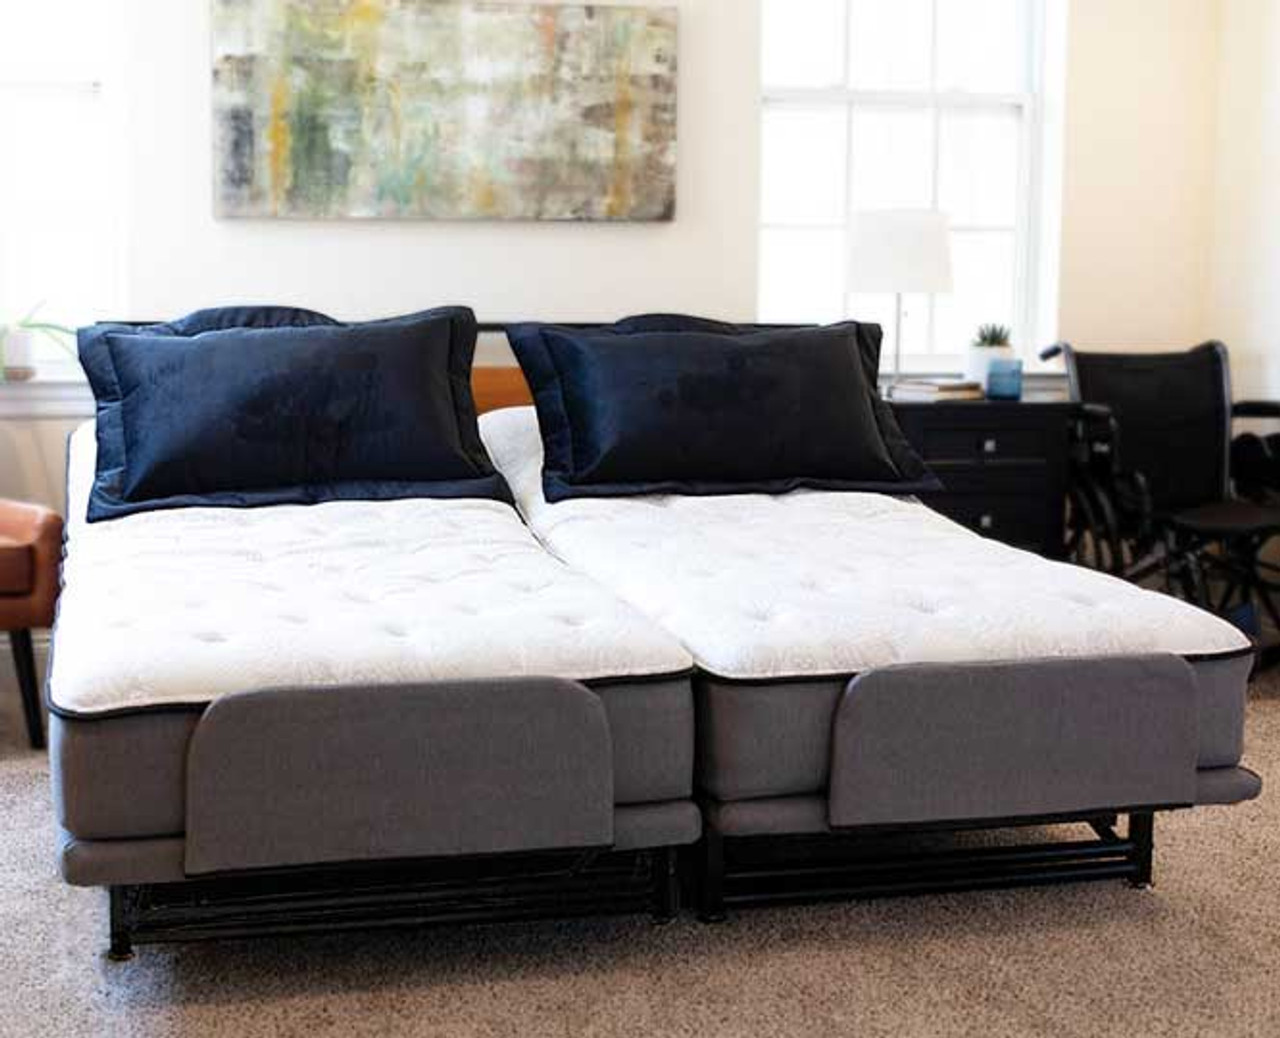 split queen mattress for platform bed